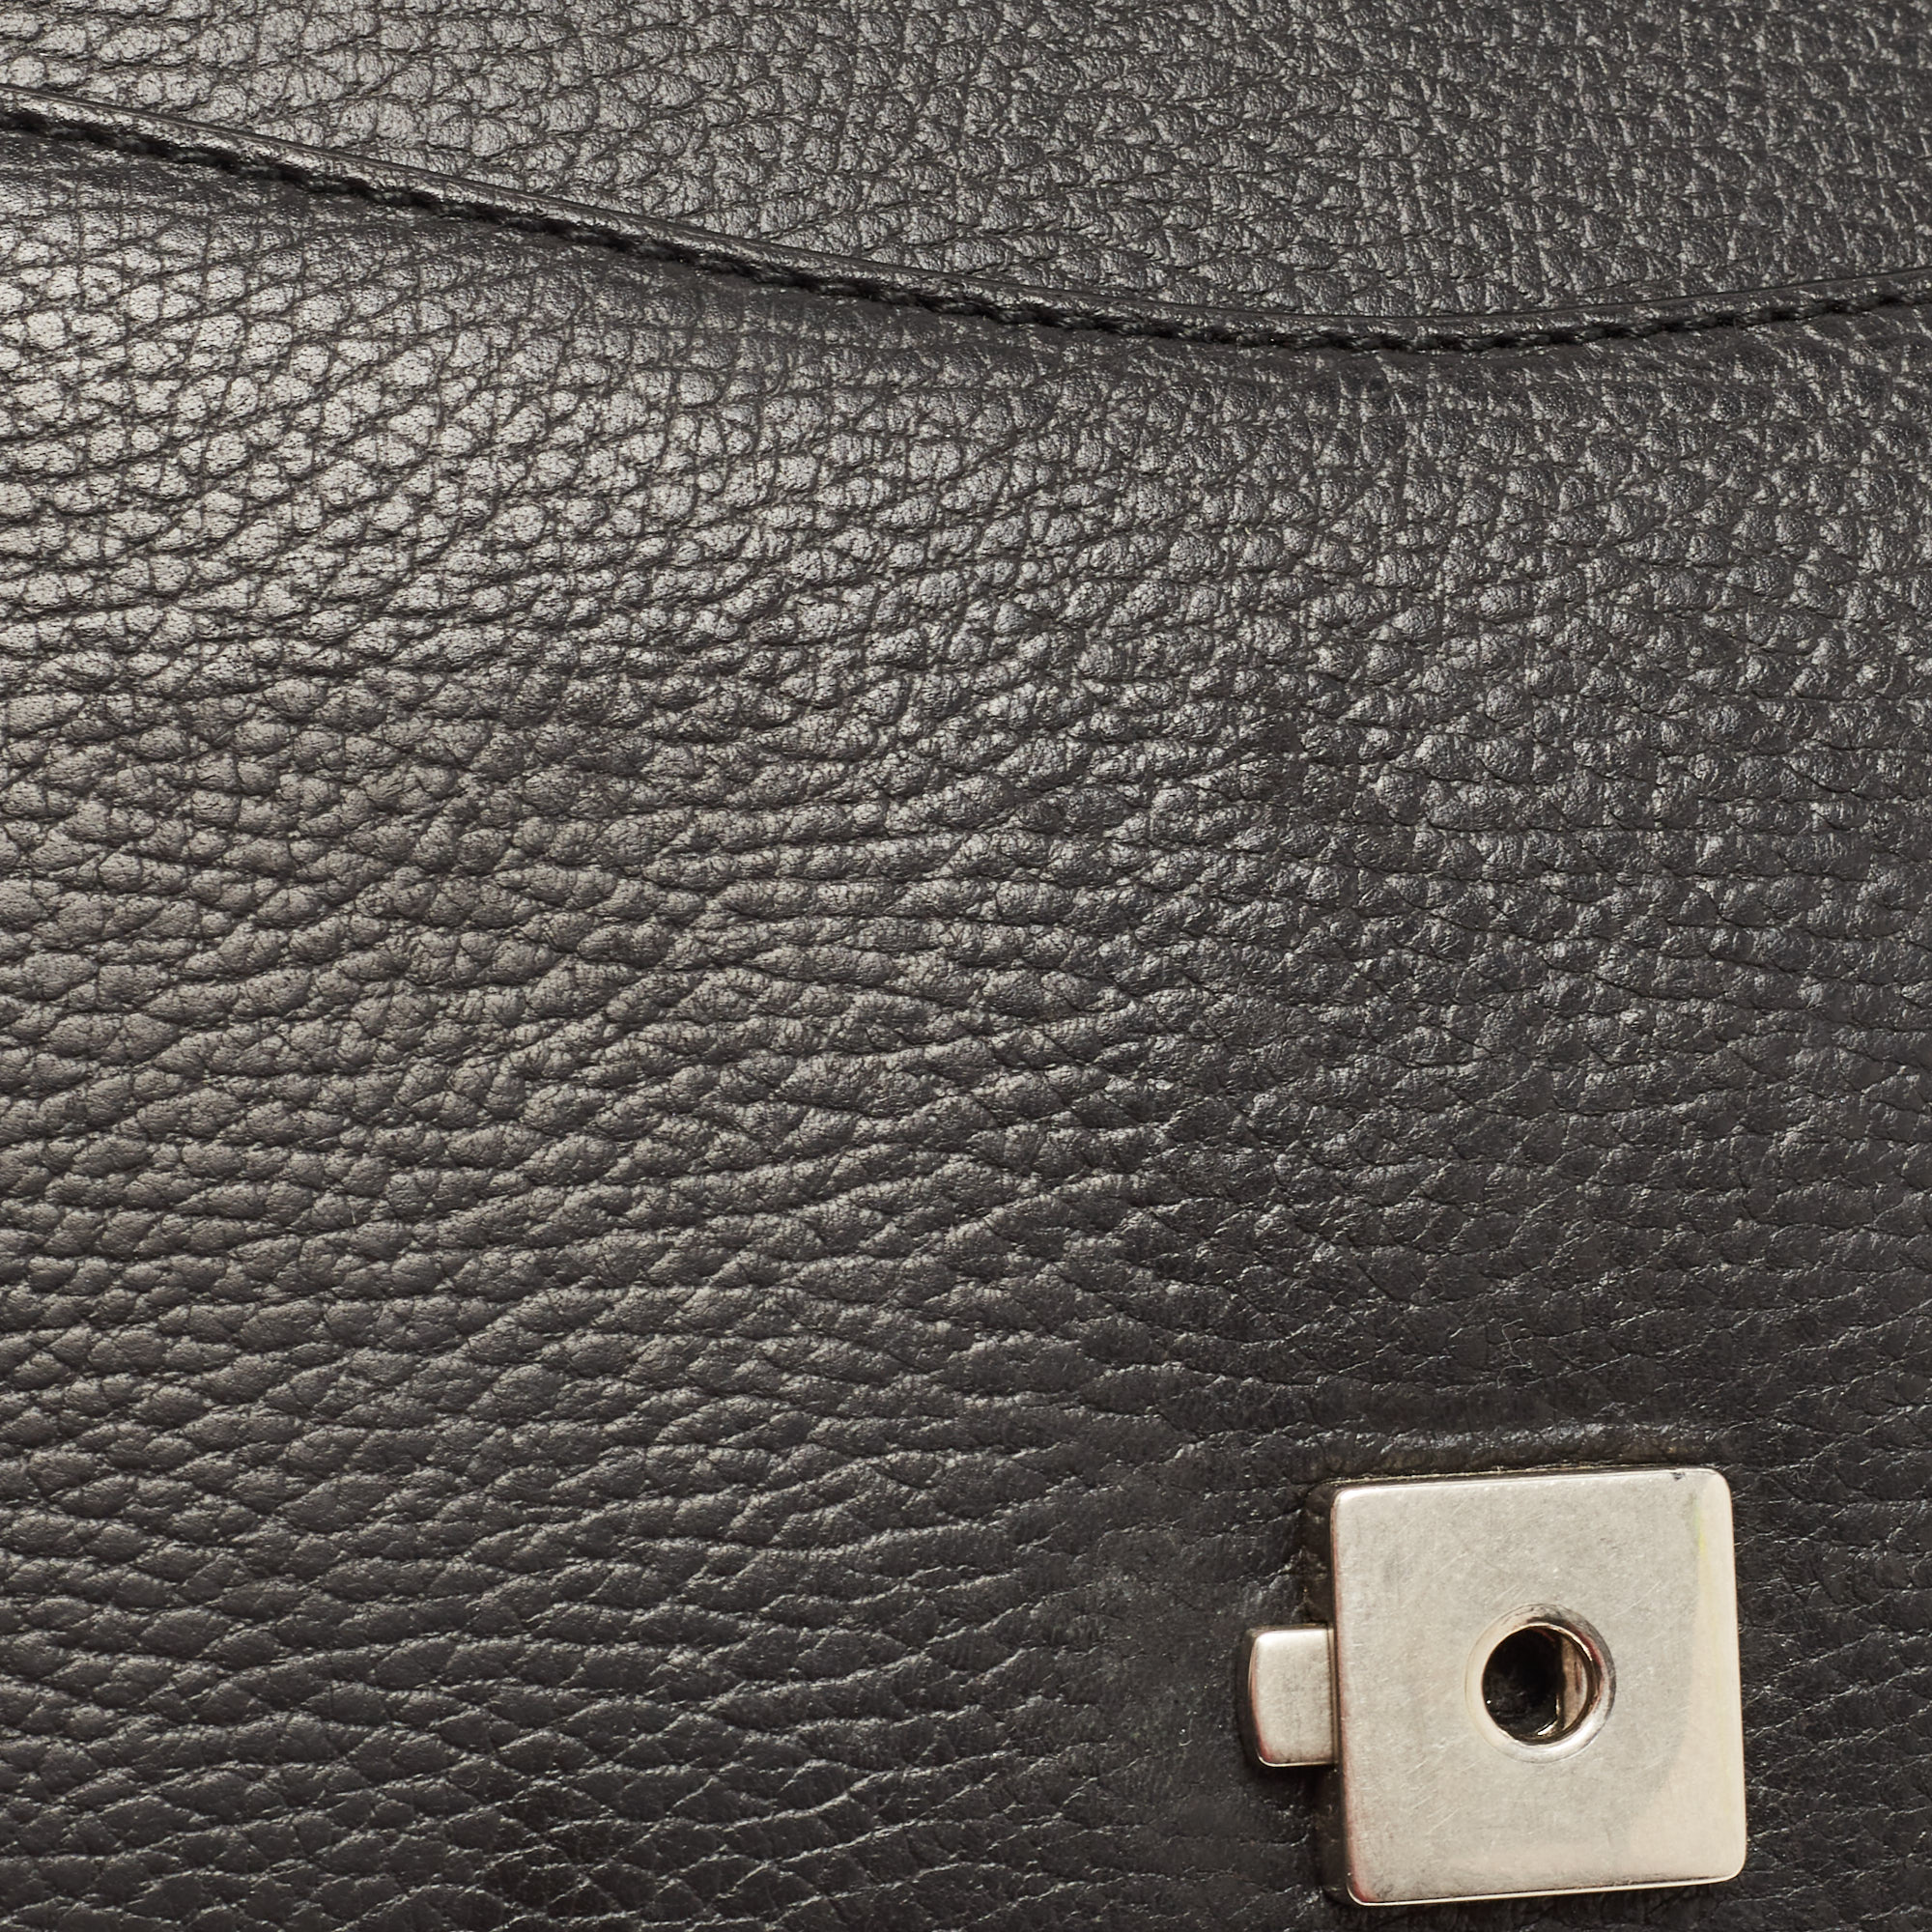 Gucci Black Leather Small Dionysus Shoulder Bag